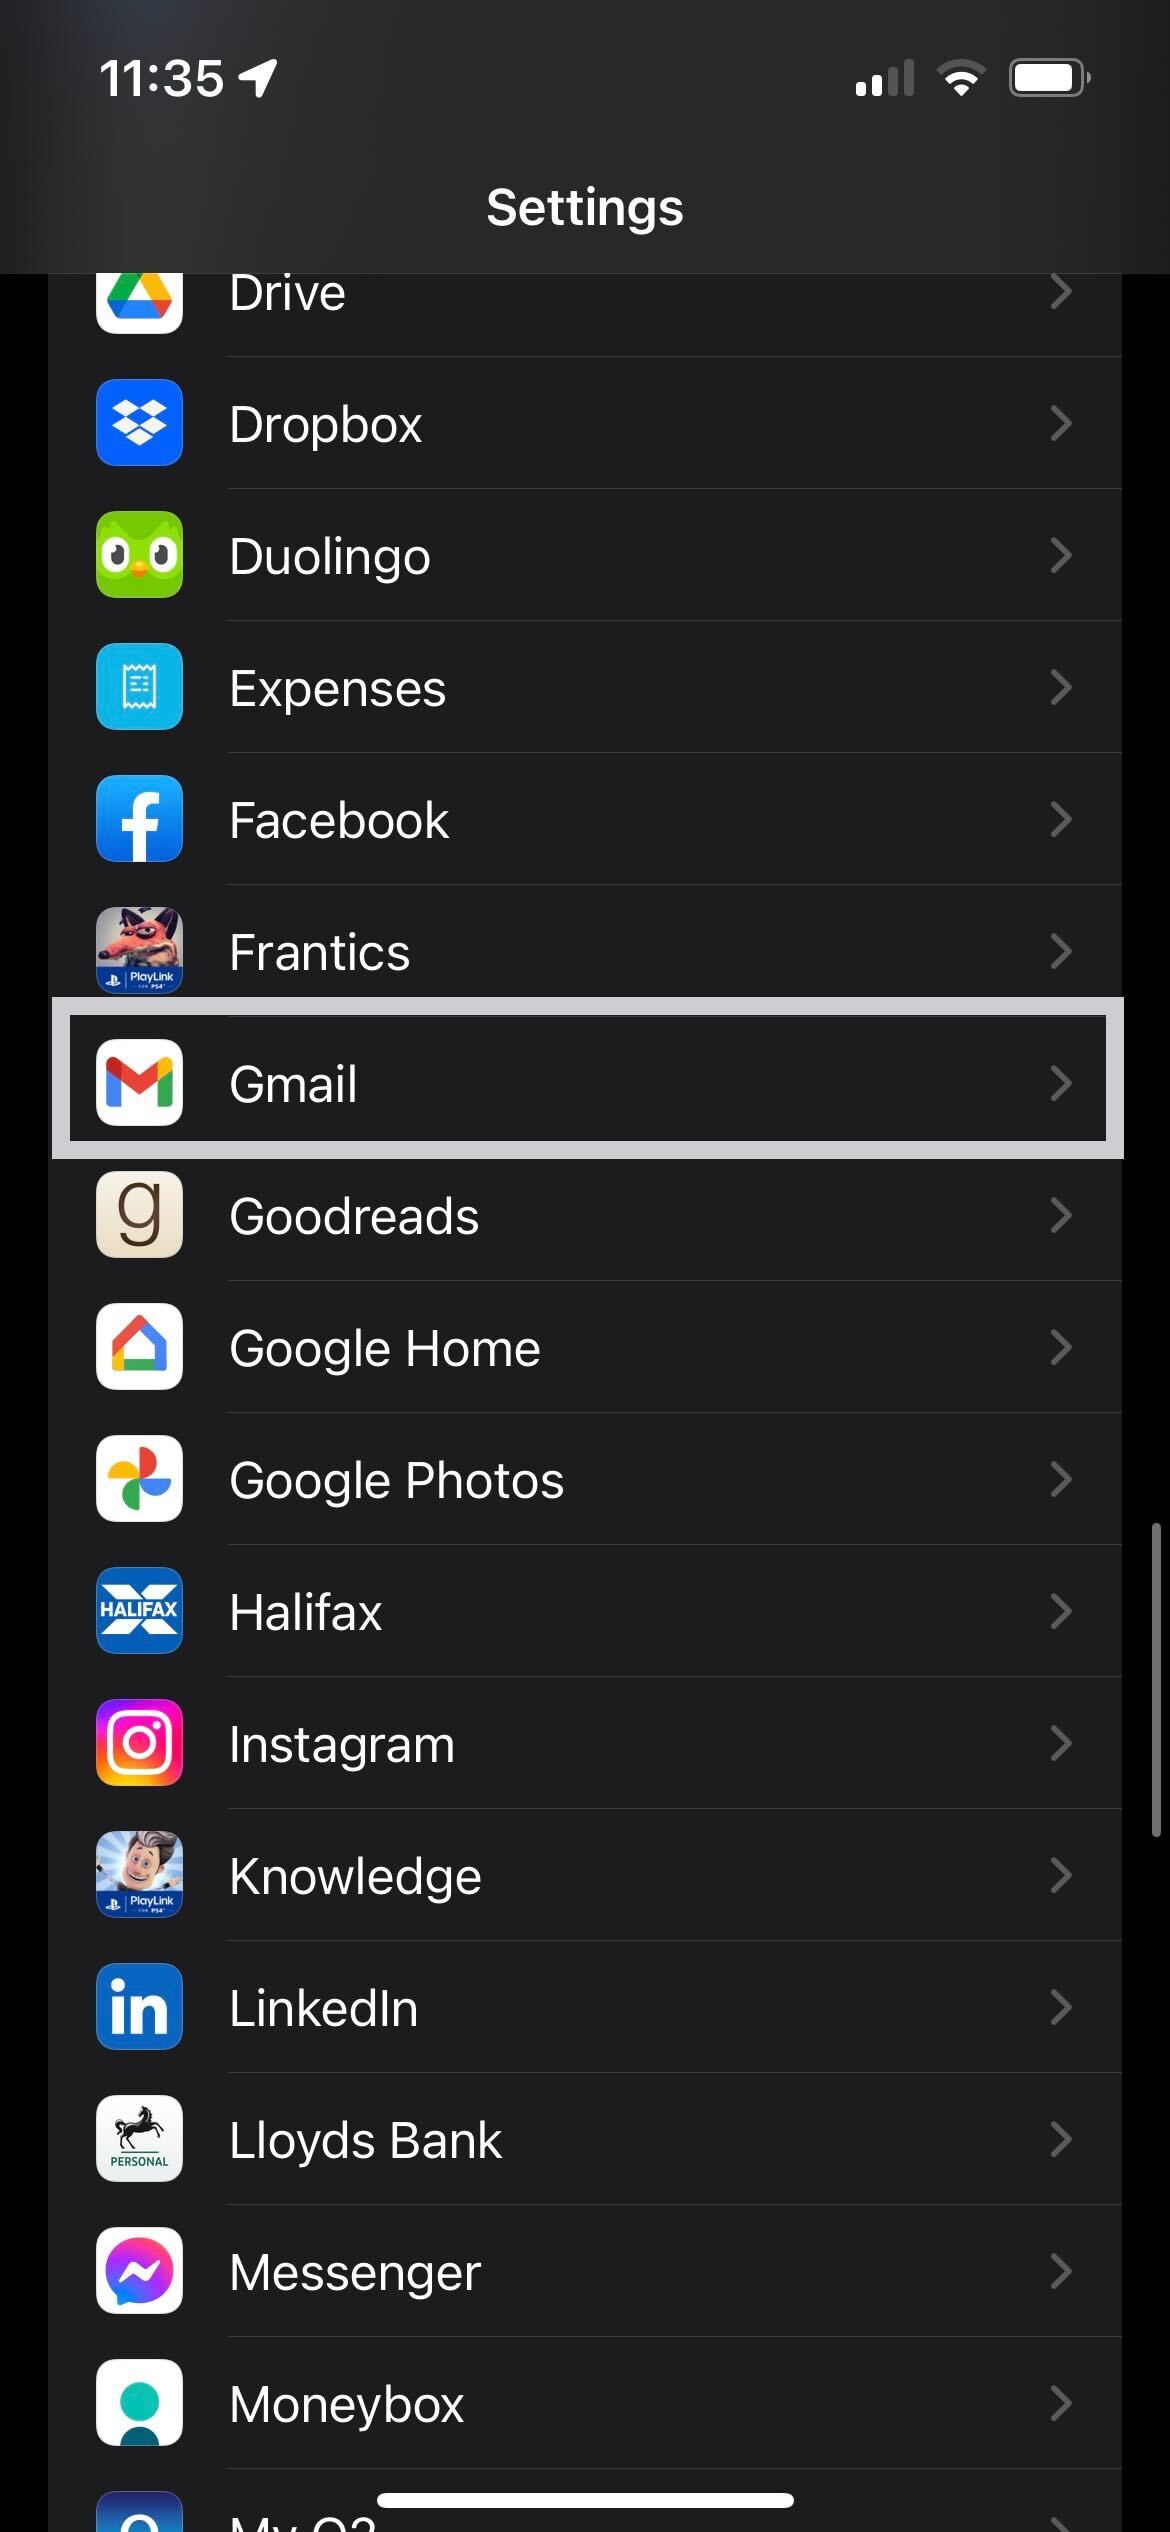 Gmail app in Settings on iOS